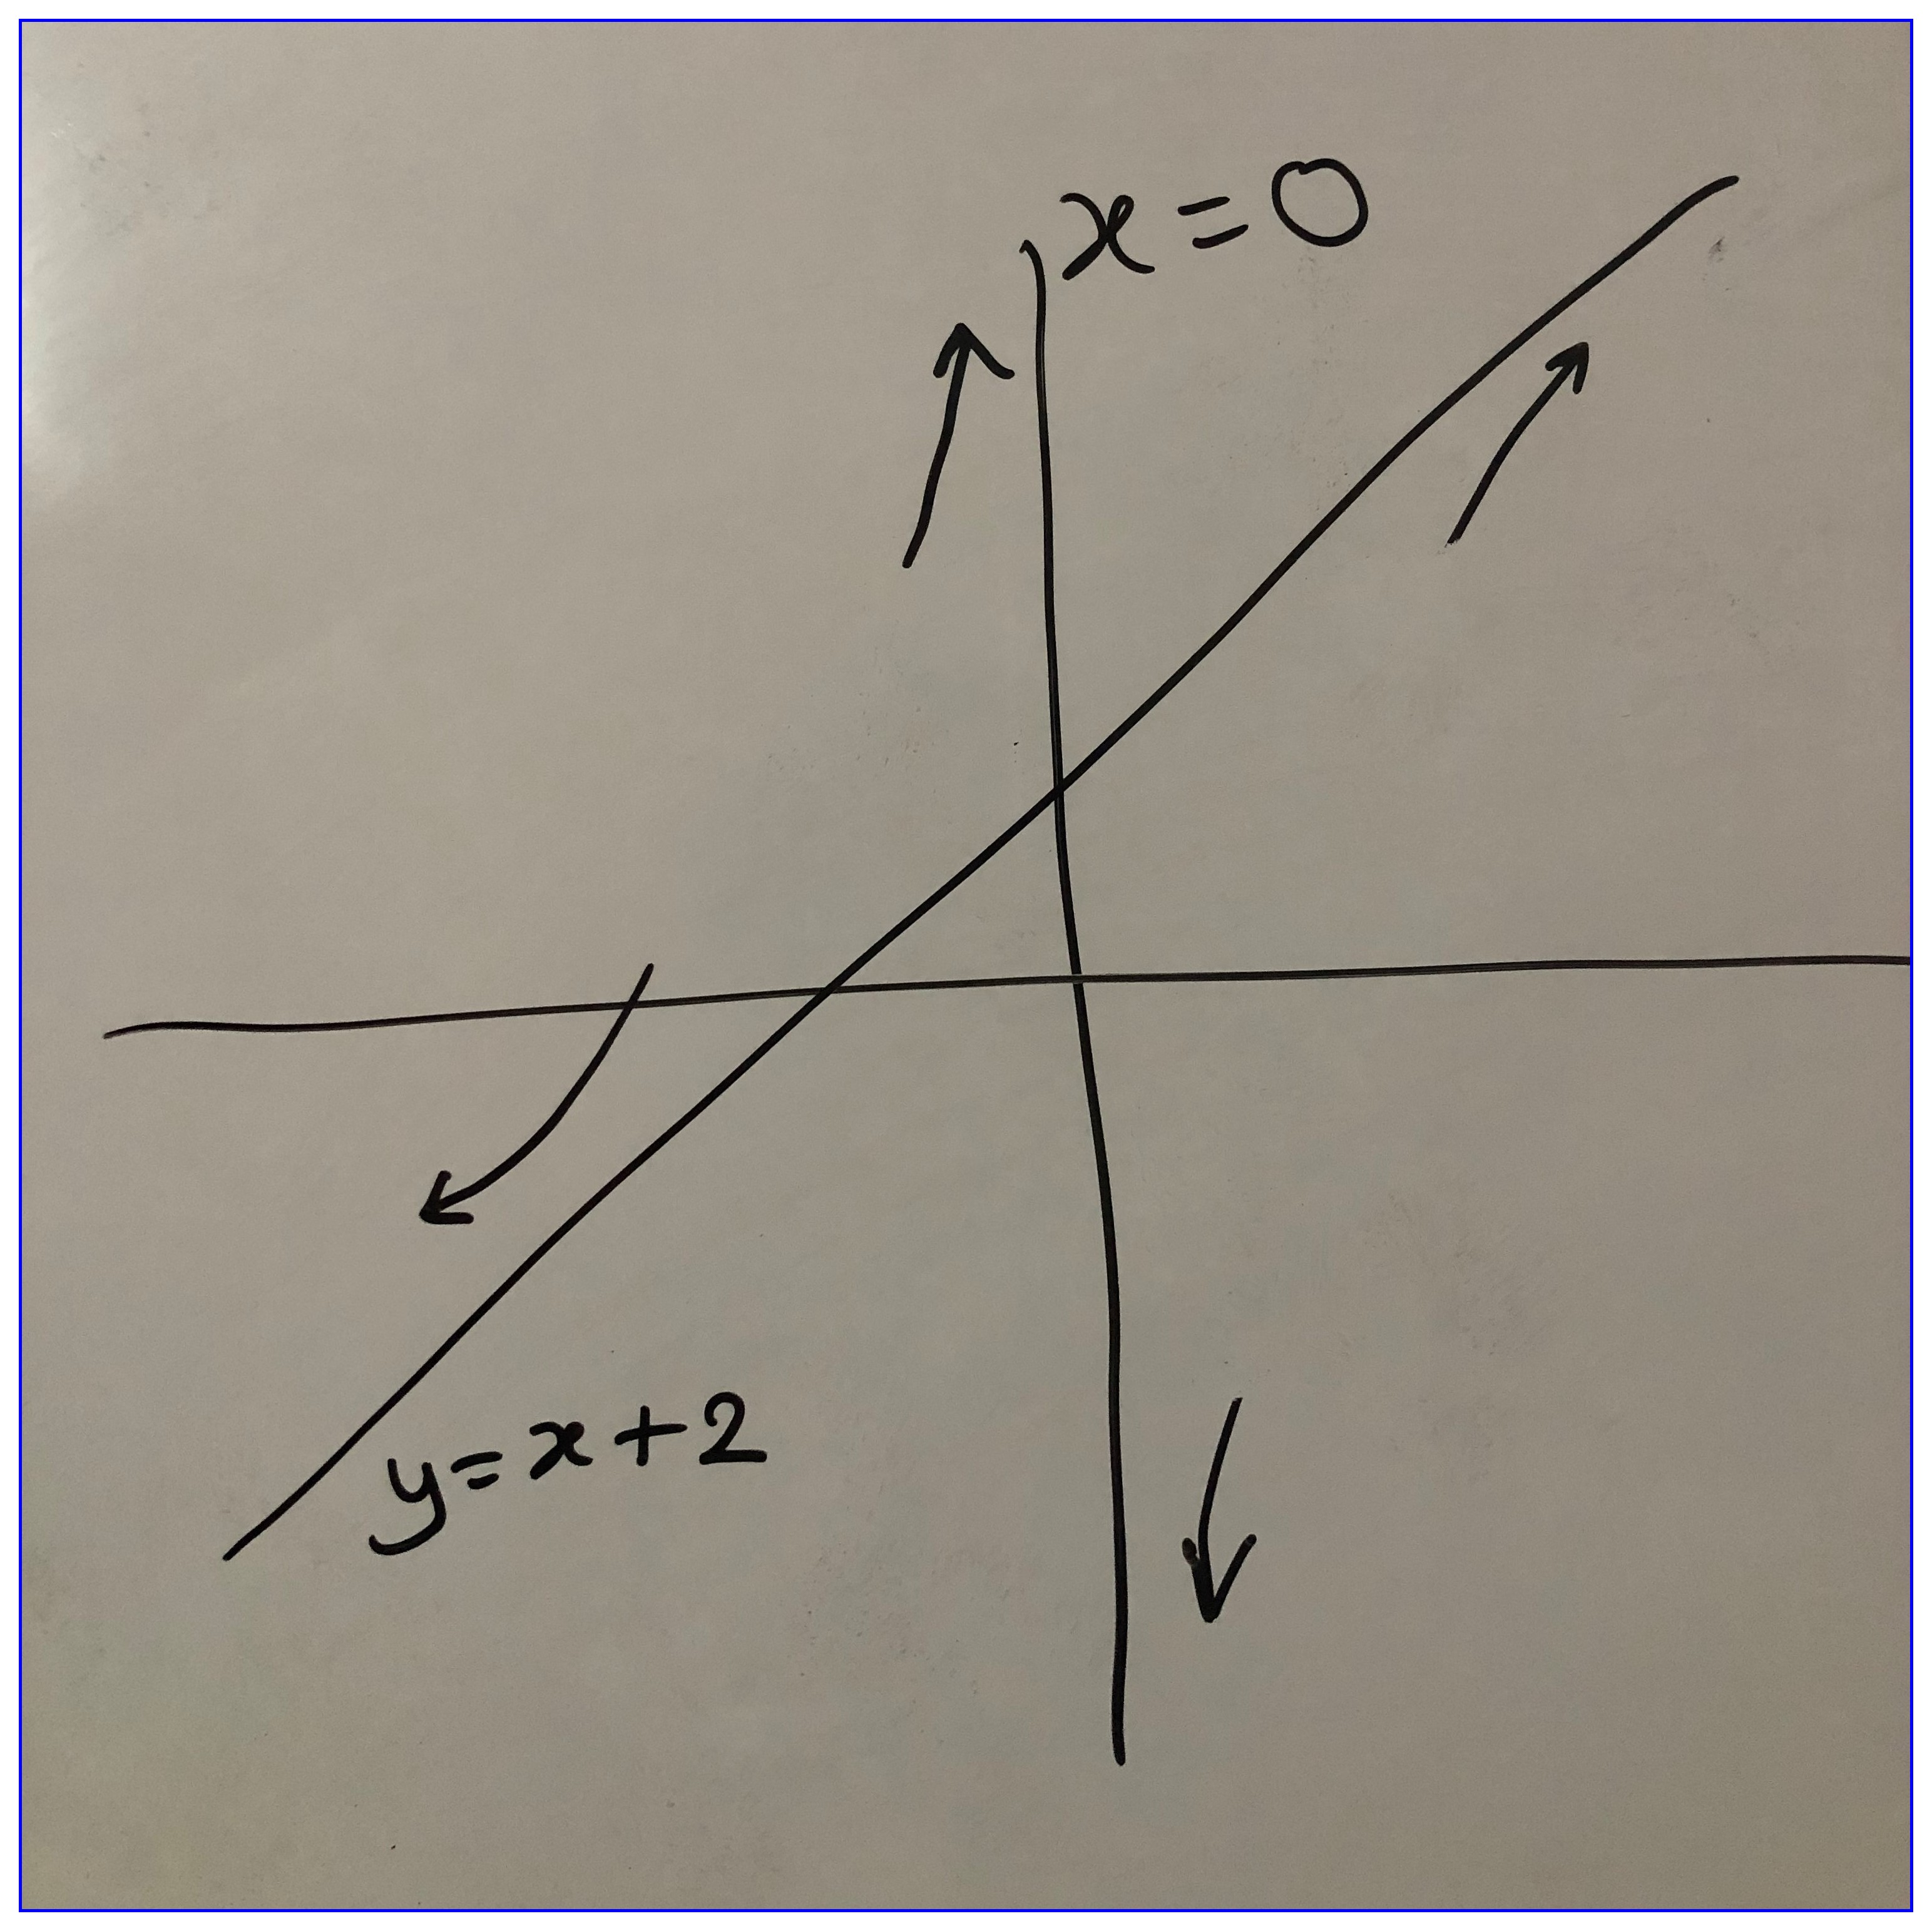 Curve and asymptotes of $\dfrac{x^2 + 2x -1}{x}$